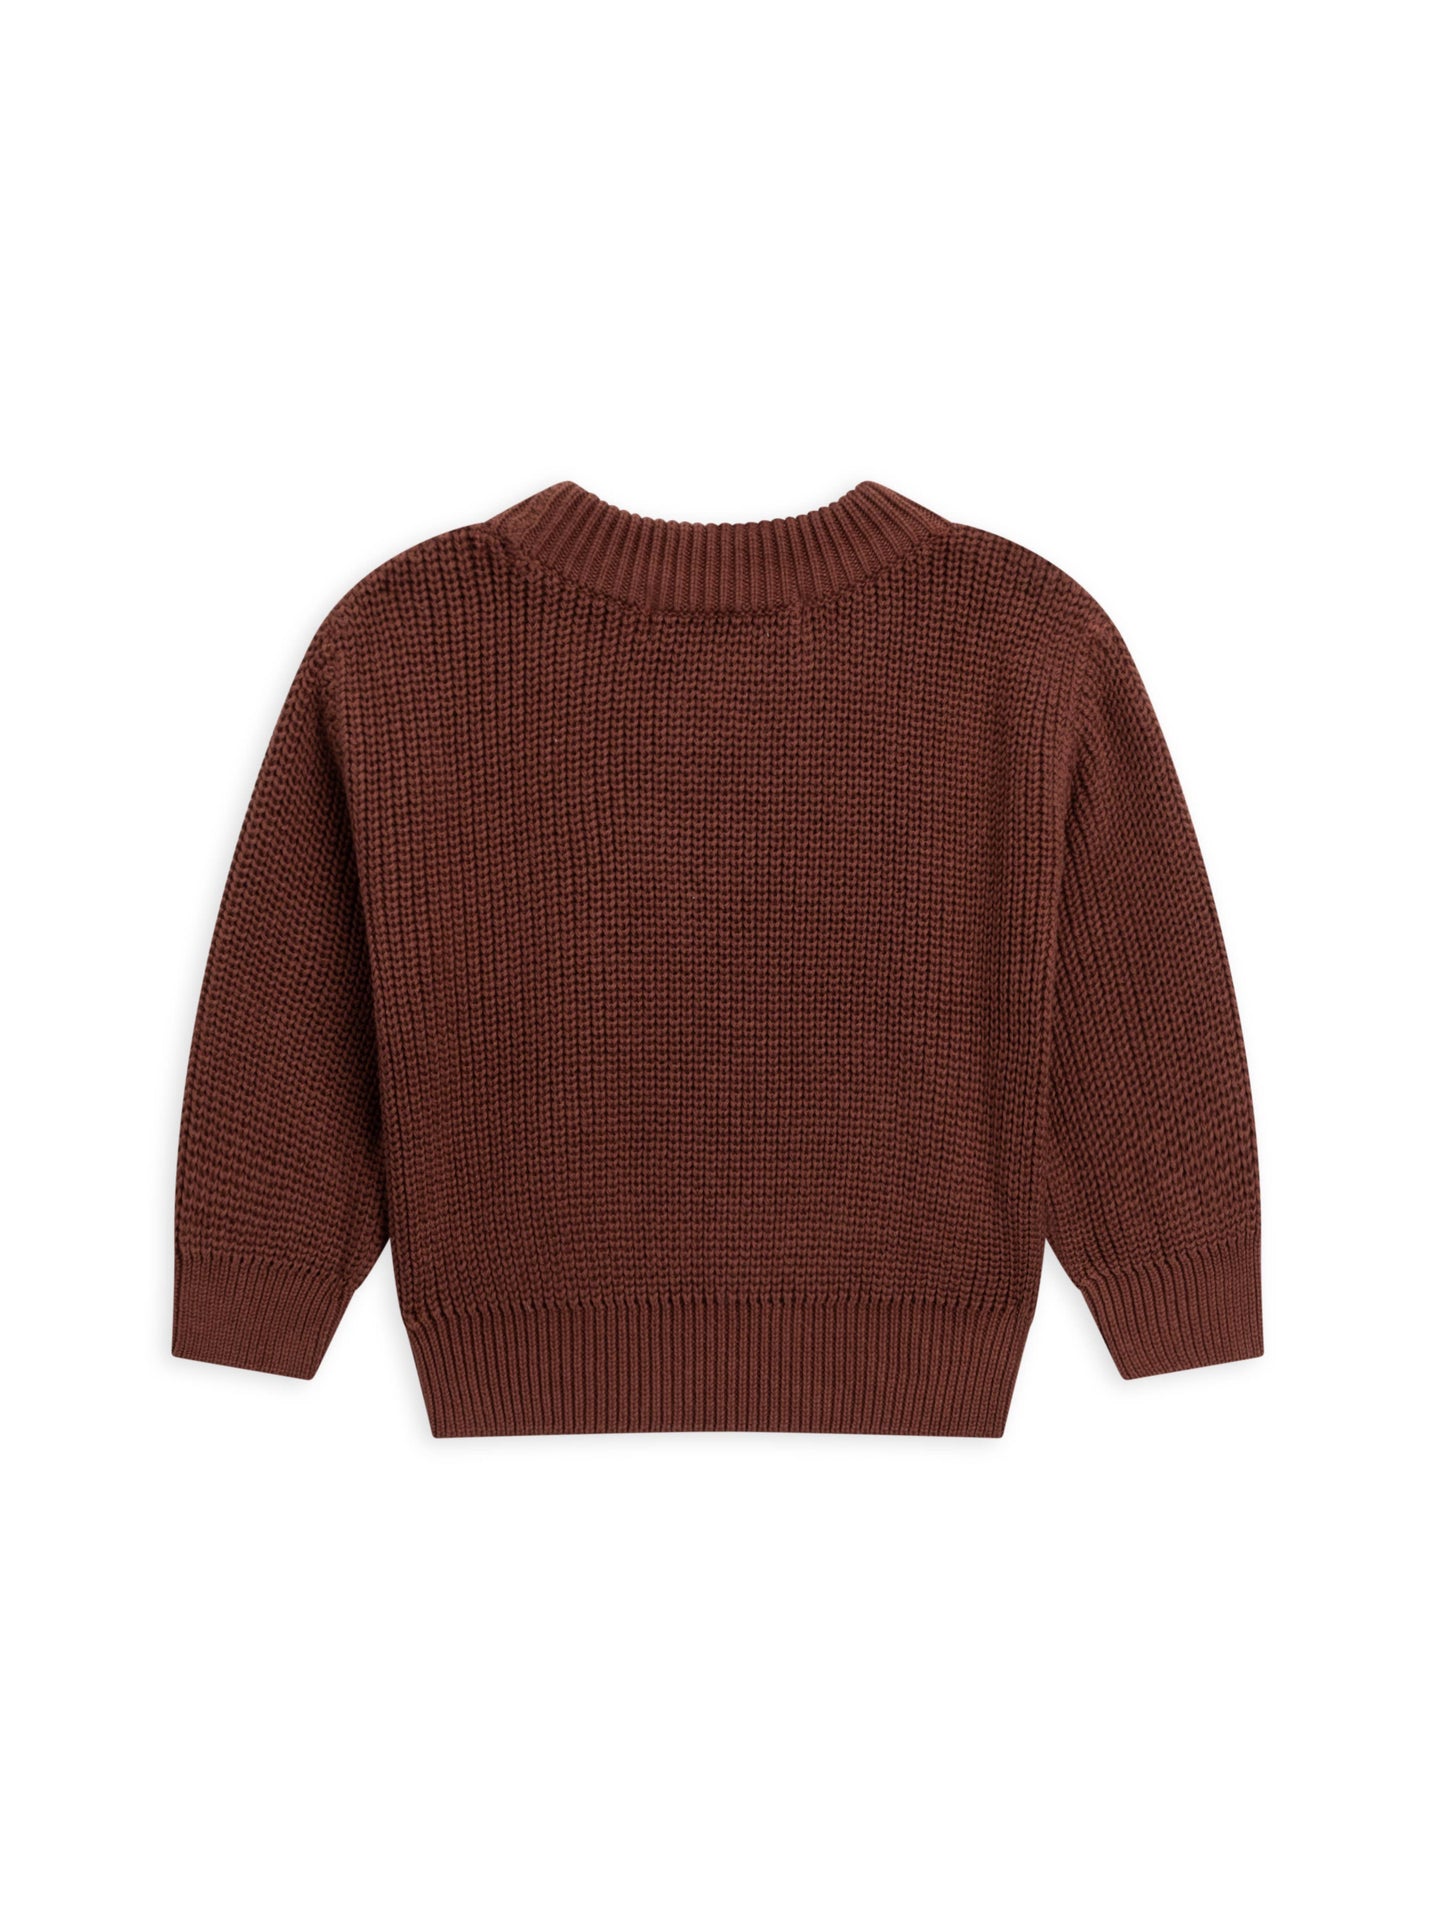 Sweater Crew - Sumac: 6-12M